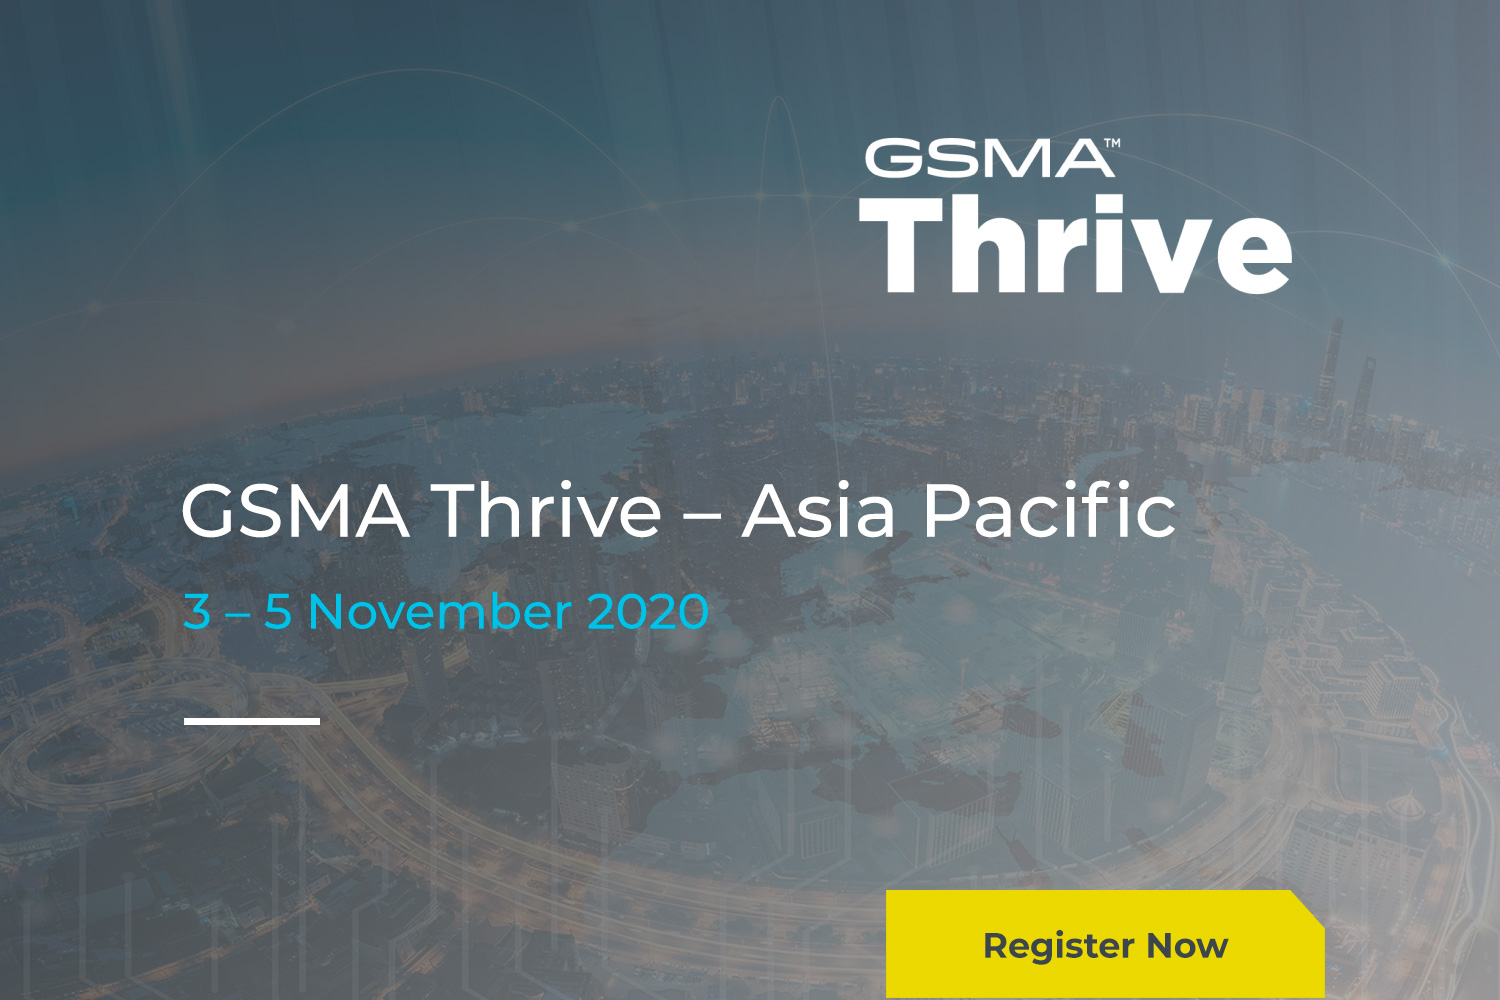 GSMA Thrive Asia